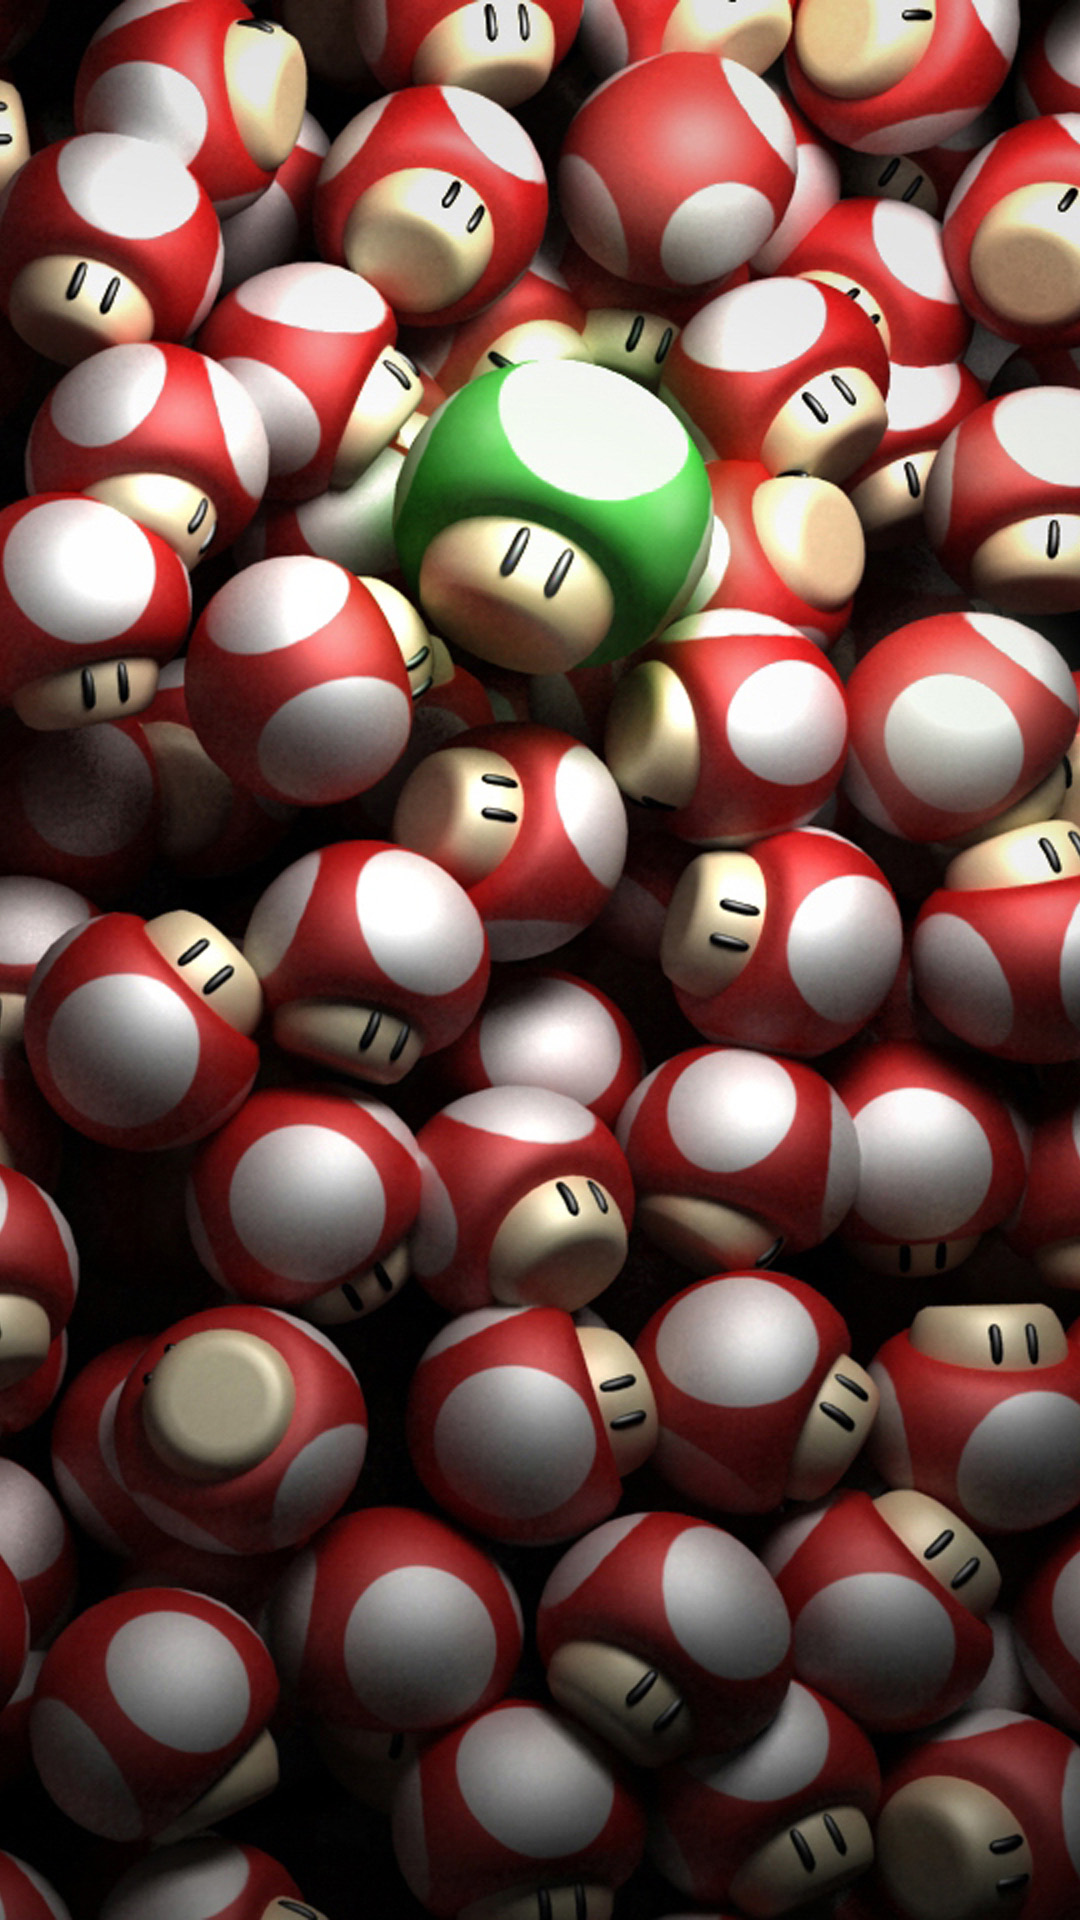 mario-iphone-wallpaper-mushrooms-red-green-1-up